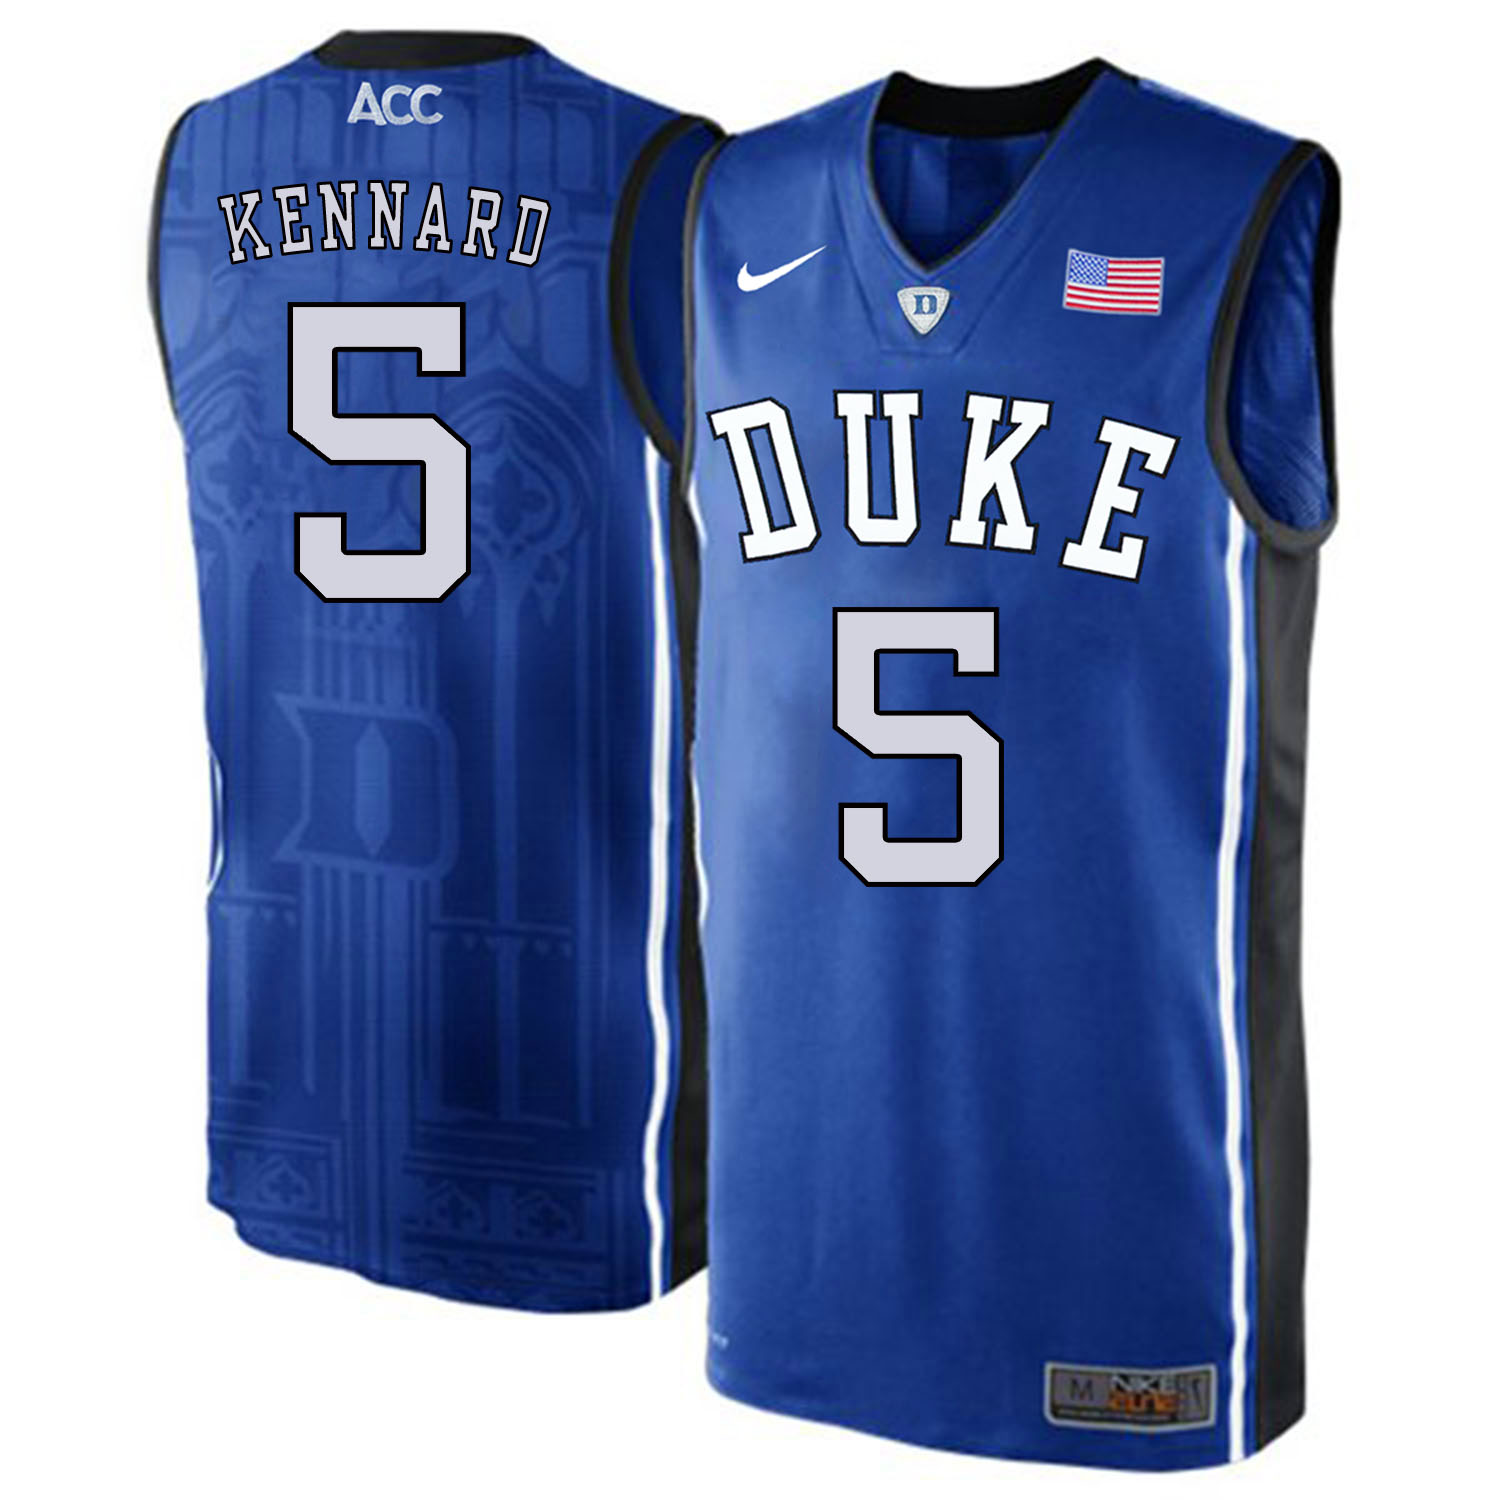 Duke Blue Devils 5 Luke Kennard Blue Elite Nike College Basketball Jersey